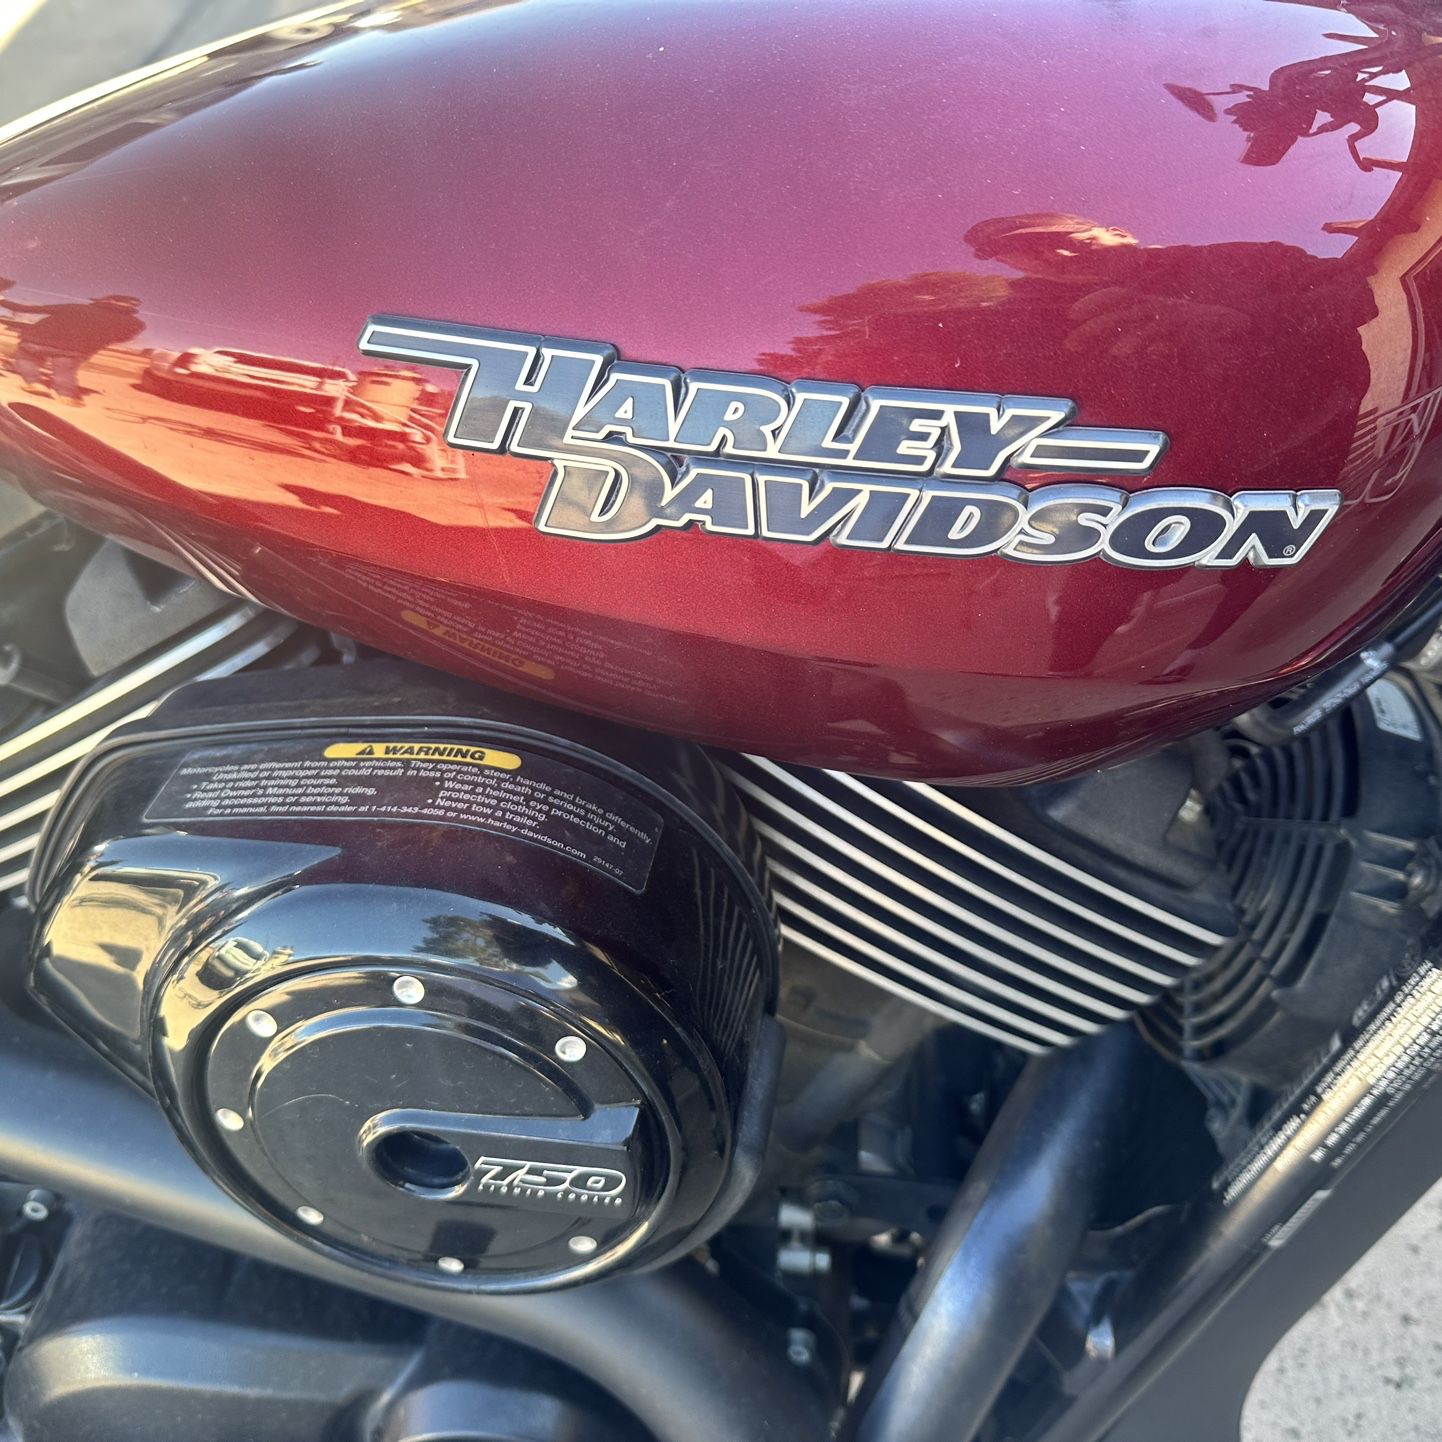 2017 Harley Davidson 